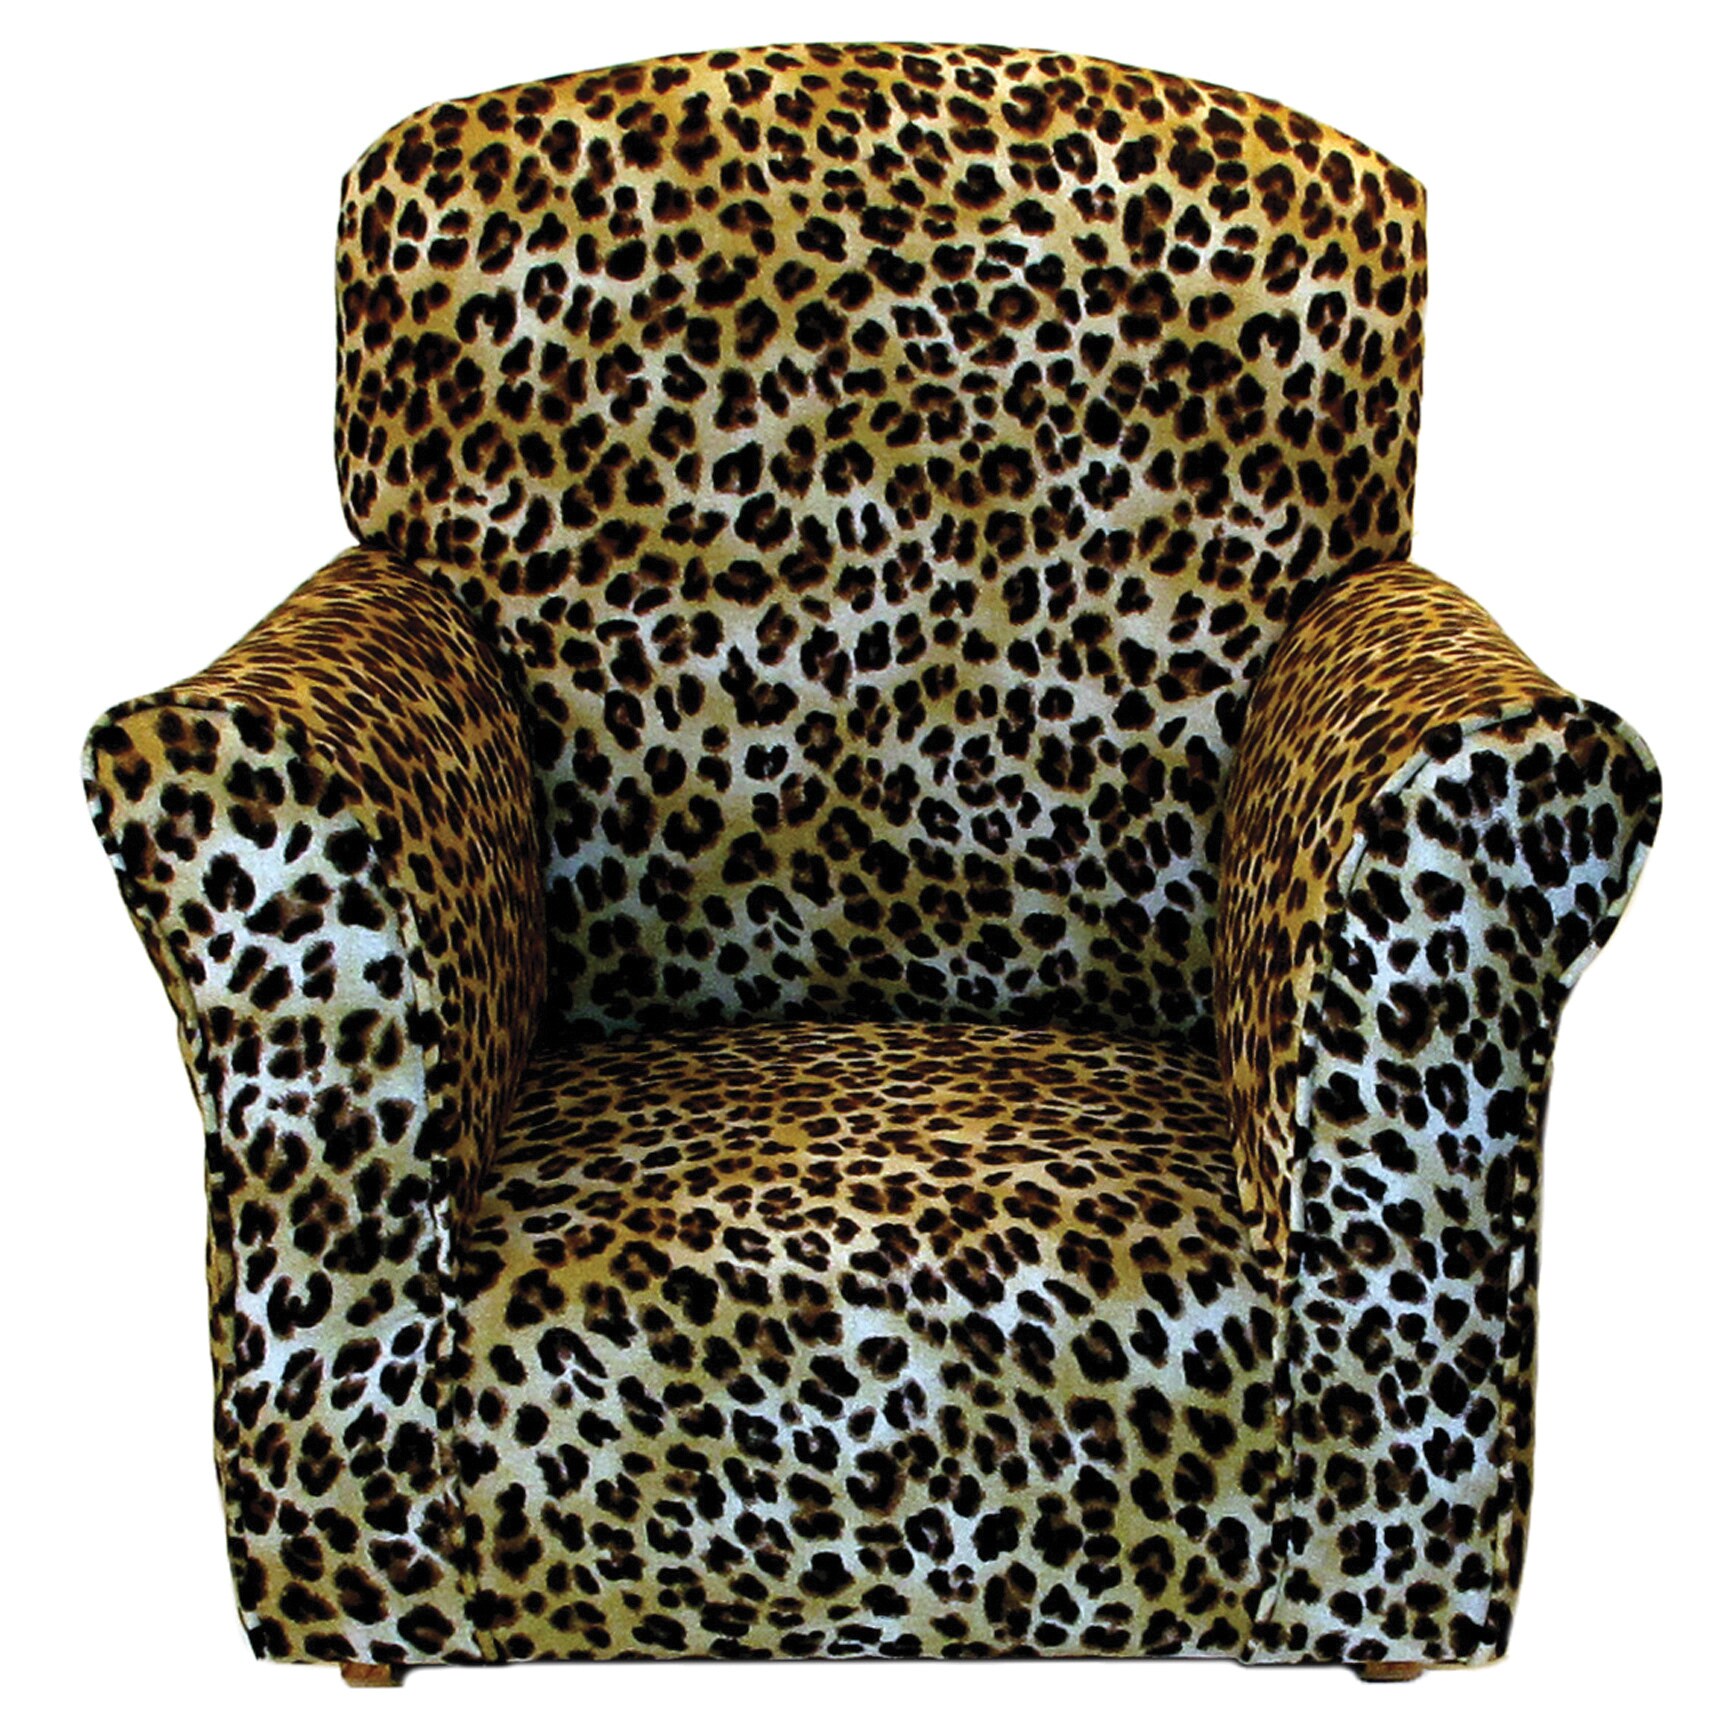 Shop Dozydotes Toddler Rocking Chair In Cheetah Print Cotton Overstock 13340694